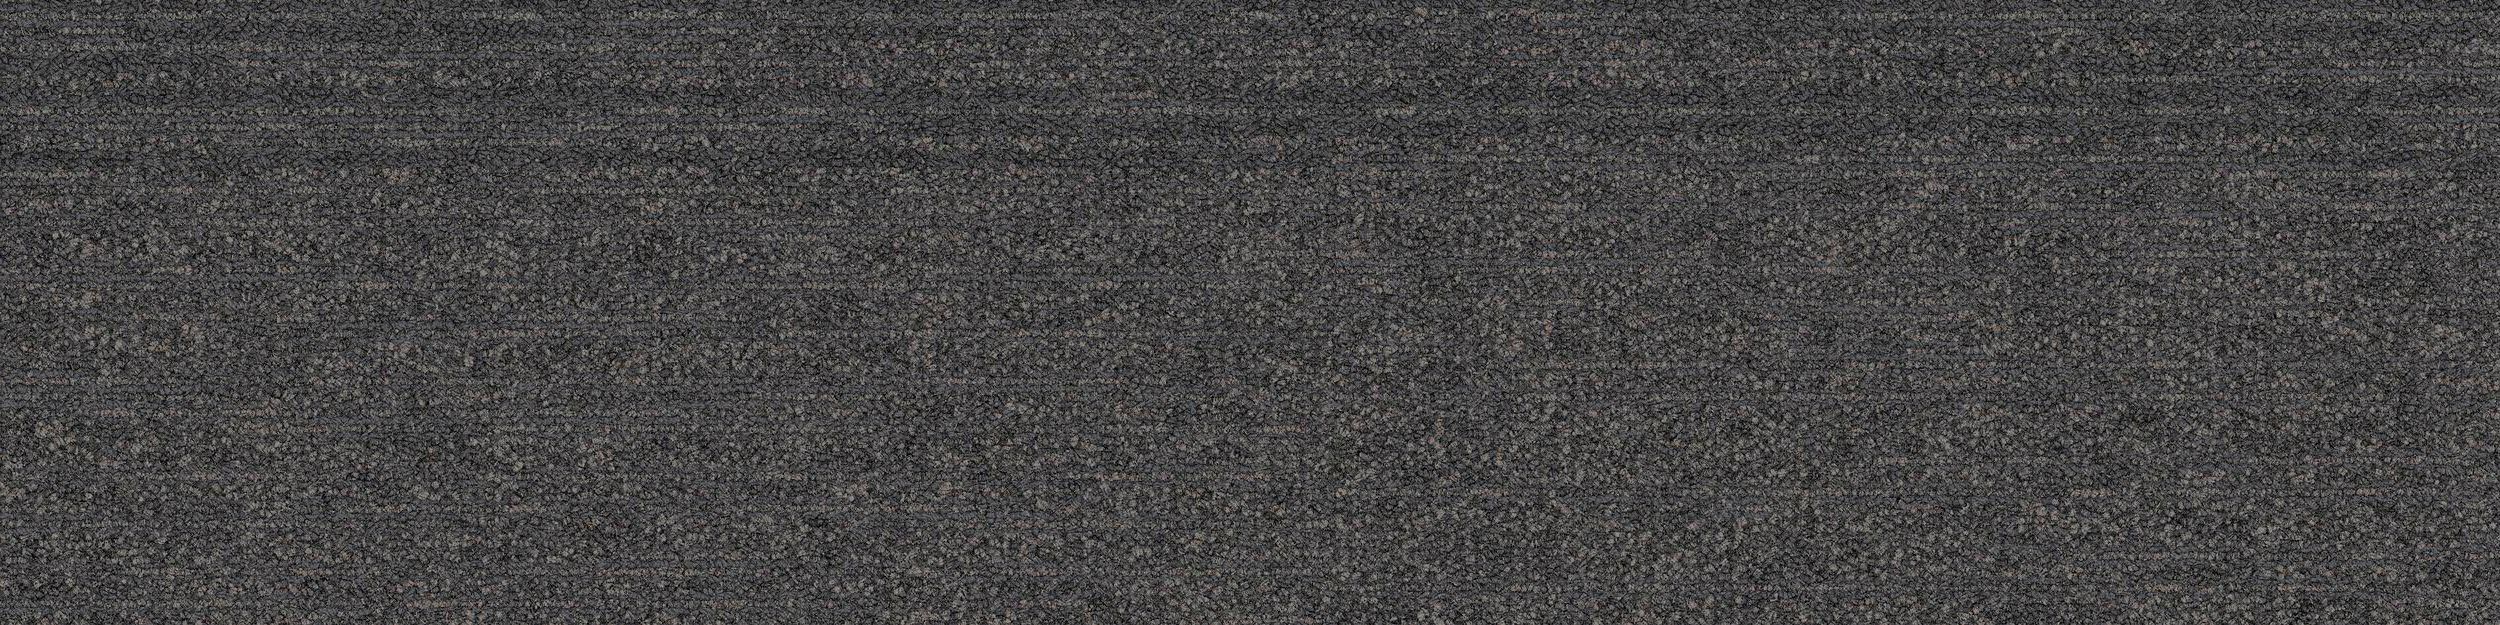 Harmonize Carpet Tile in Iron image number 2